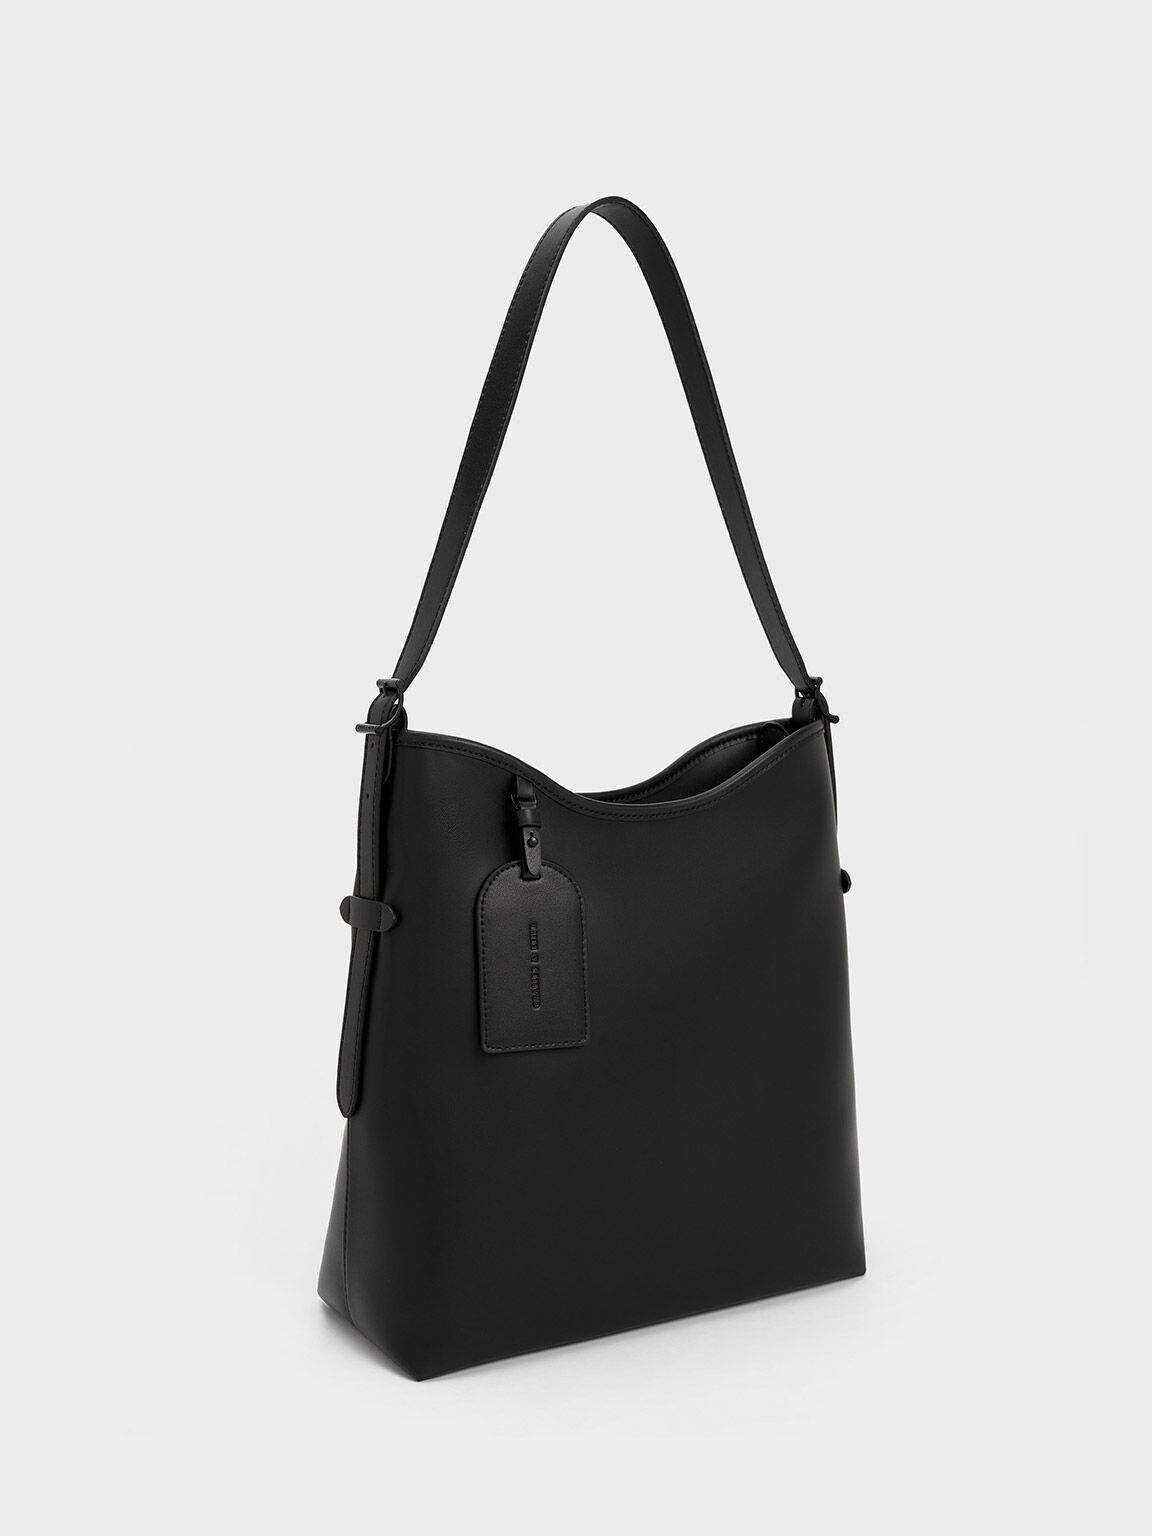 Echo Black Reversible Hobo Bag